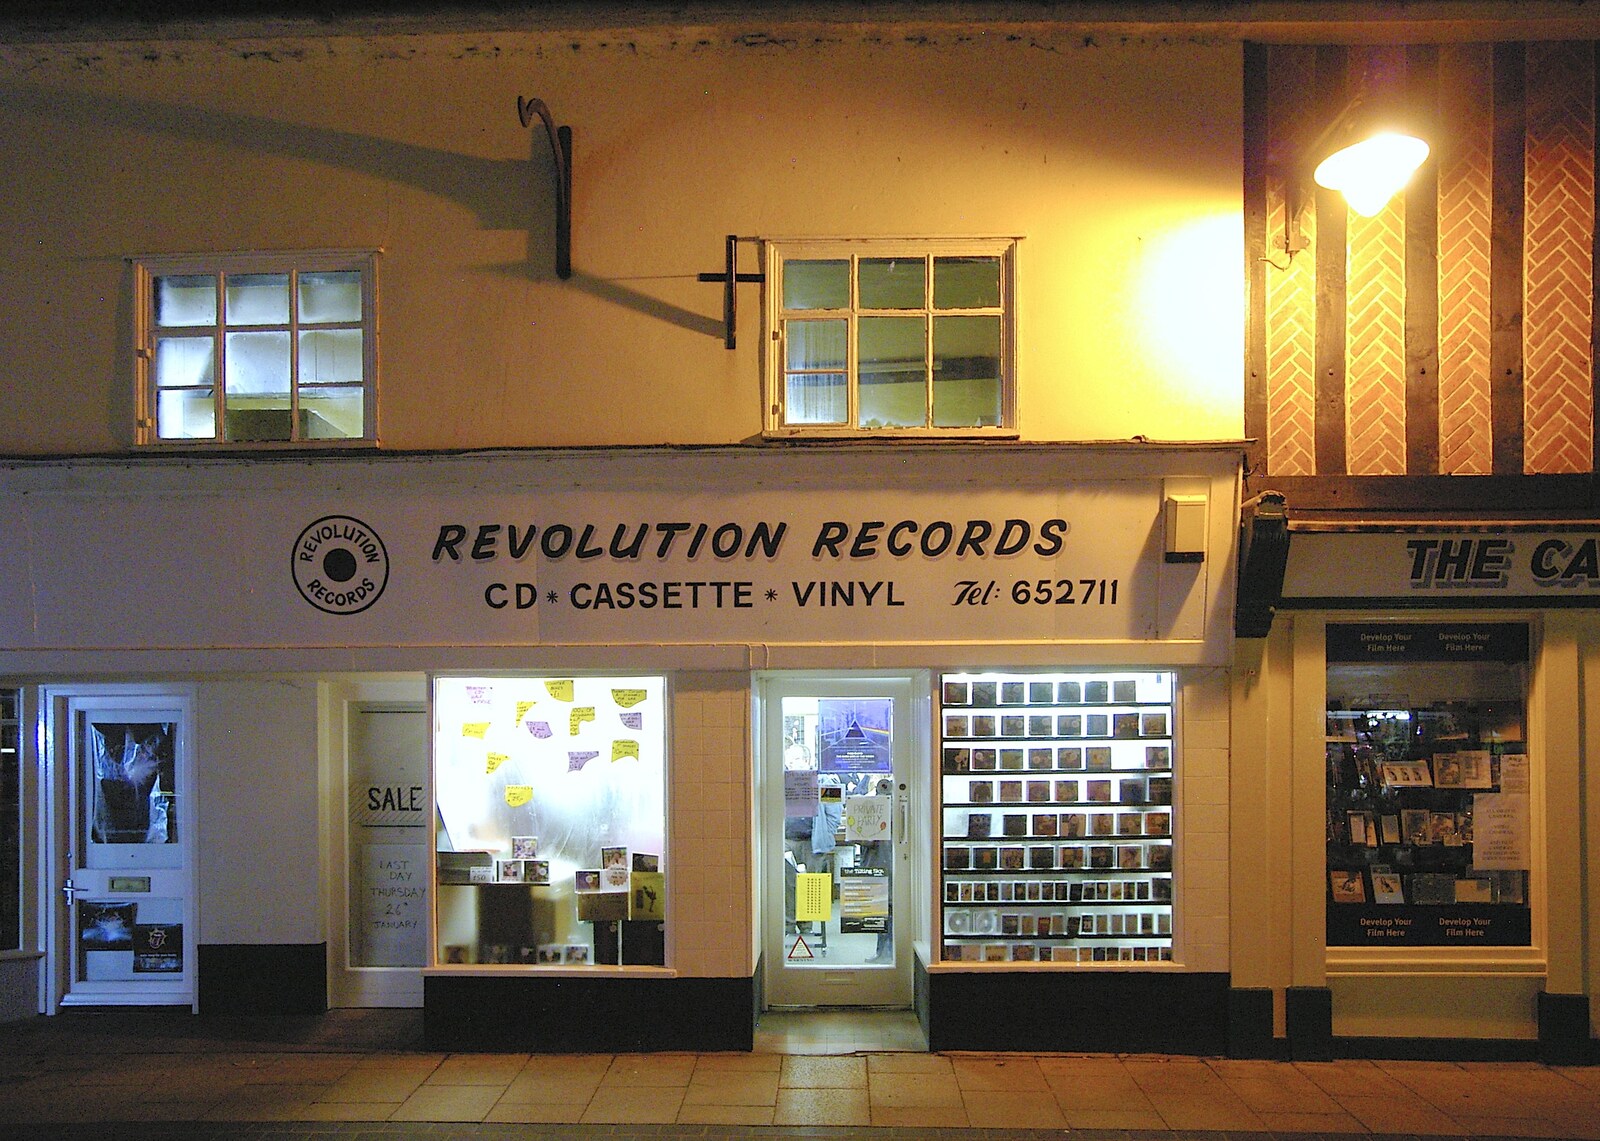 Closing Down: Viva La Revolution Records, Diss, Norfolk - 21st January 2006: The front of Revolution Records